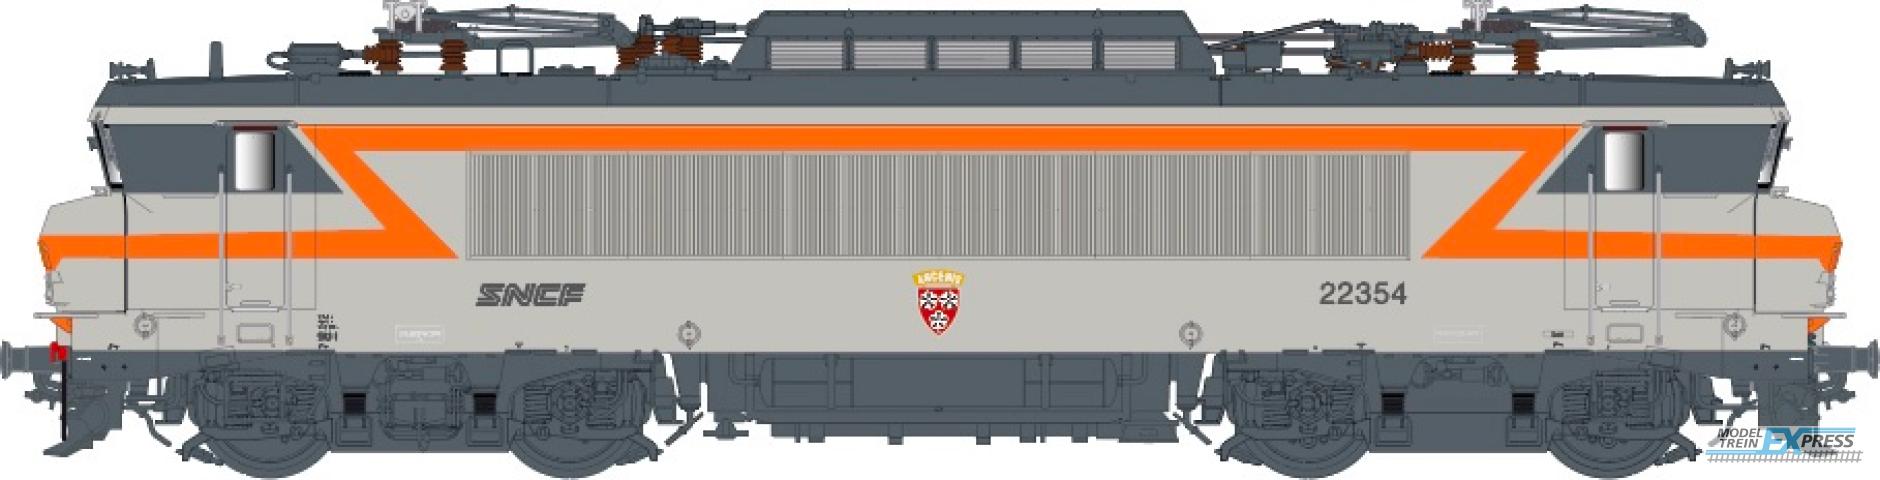 LS Models 11561S BB22354. betongrijs/oranje. Noedel-logo, wapen "Ancenis", depot Rennes / Ep. V / SNCF / HO / AC SOUND / 1 P.